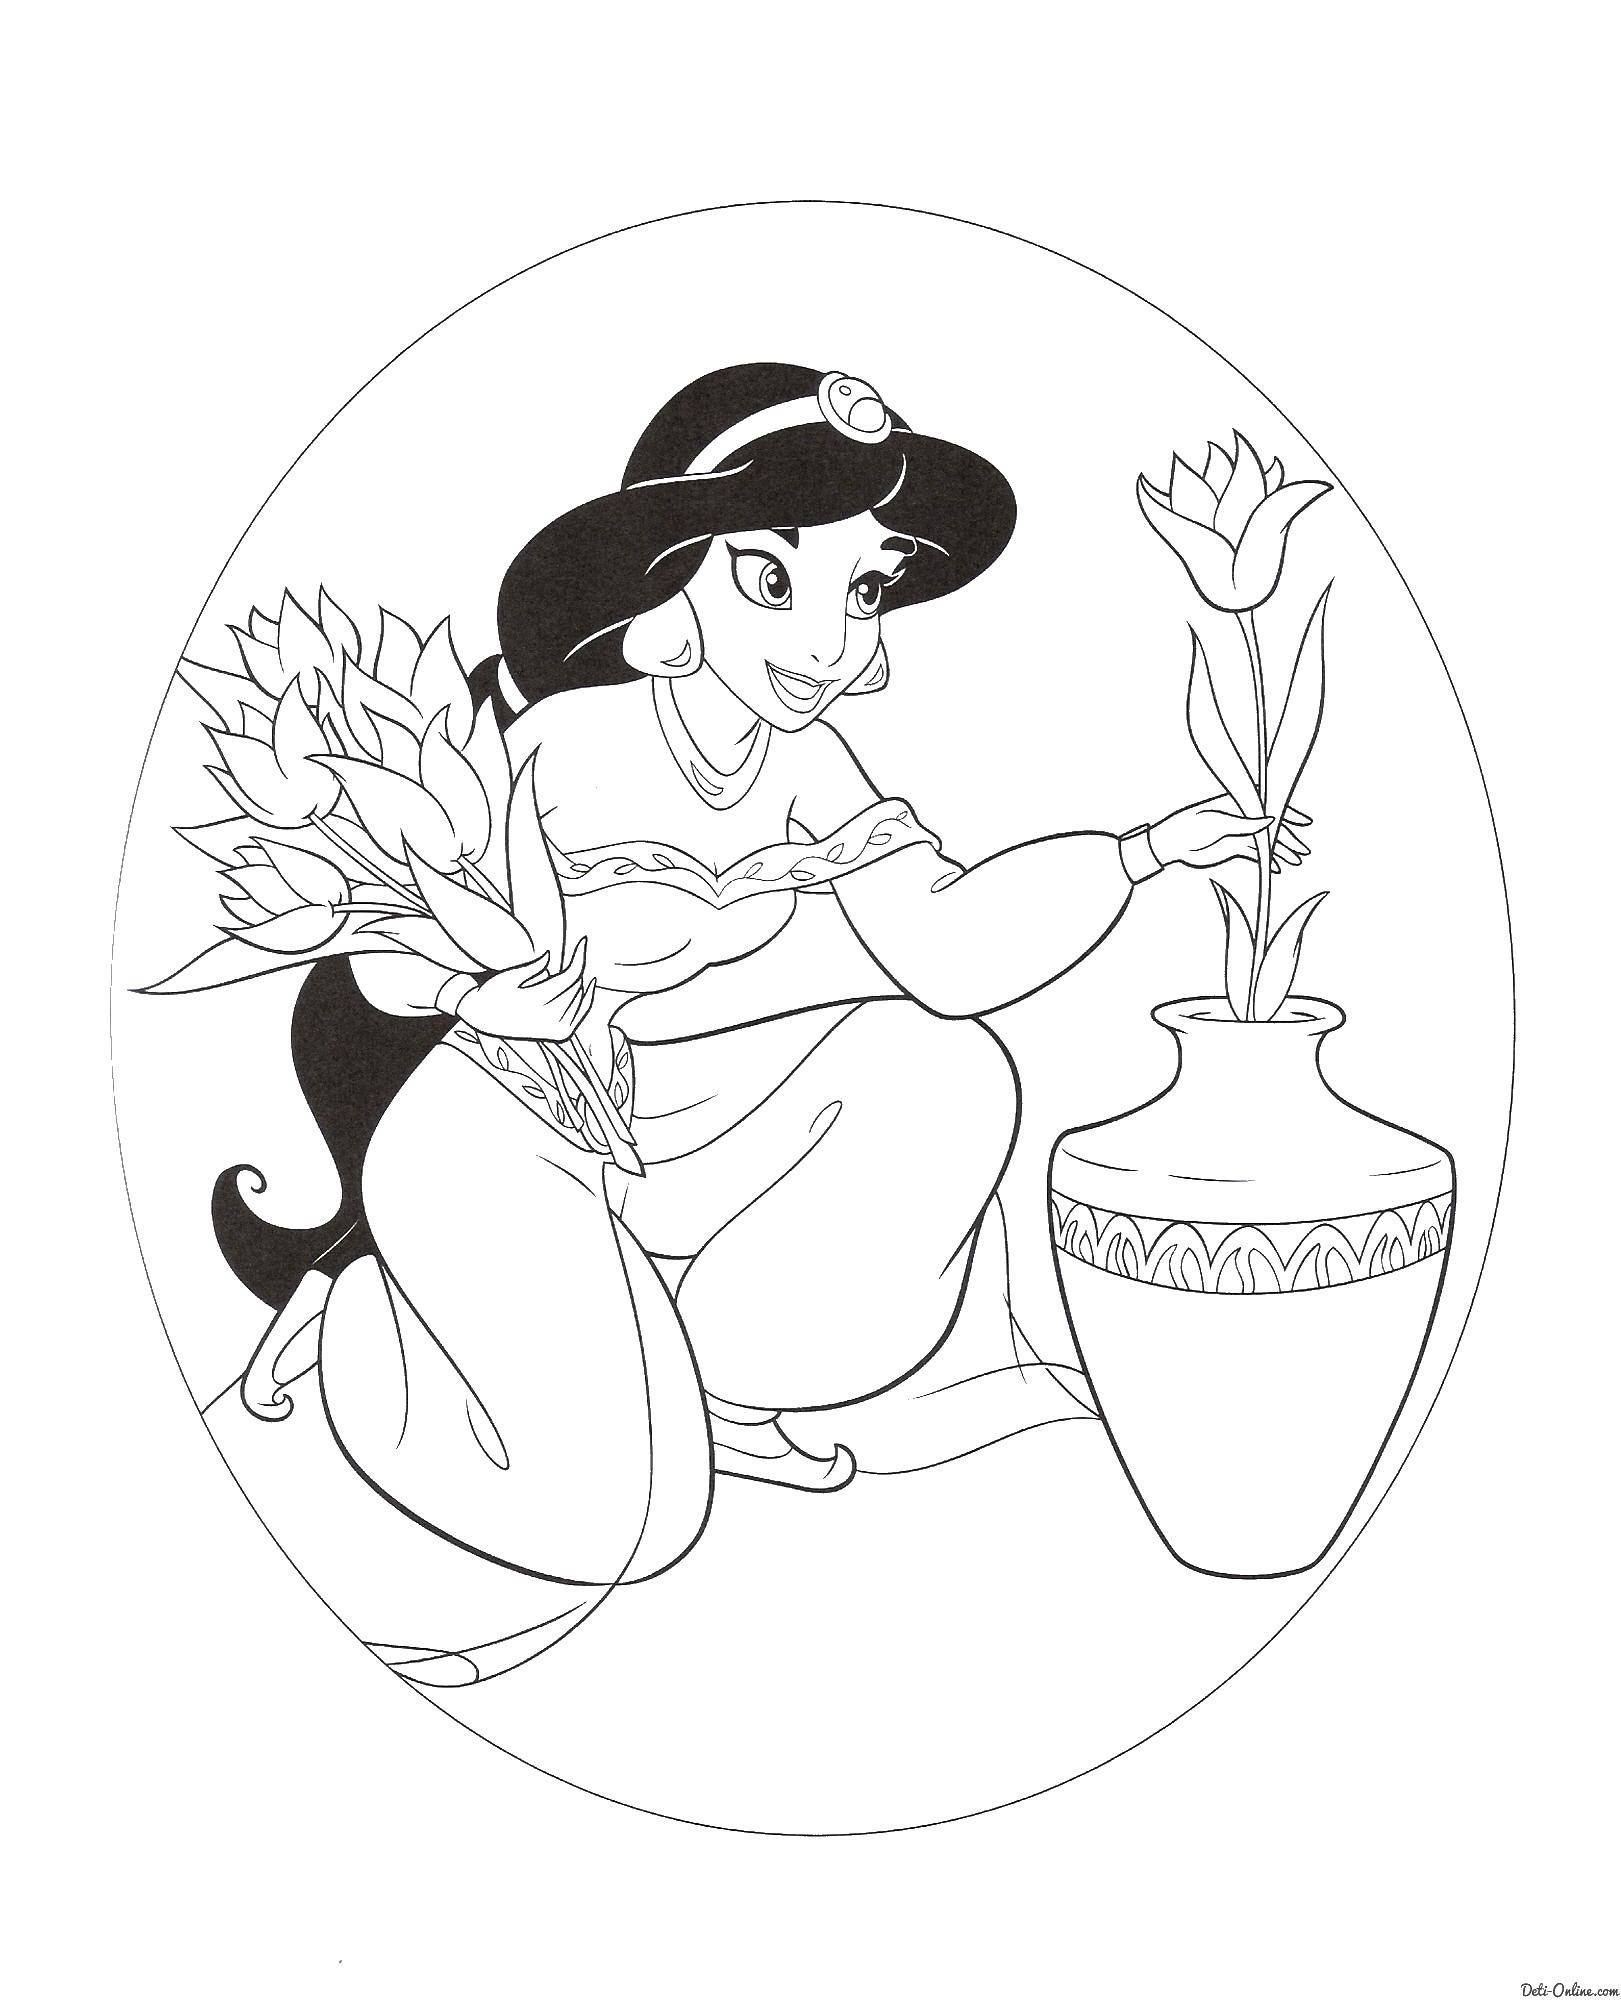 Coloring Princess Jasmine and flowers. Category Princess. Tags:  Aladdin , Jasmine.